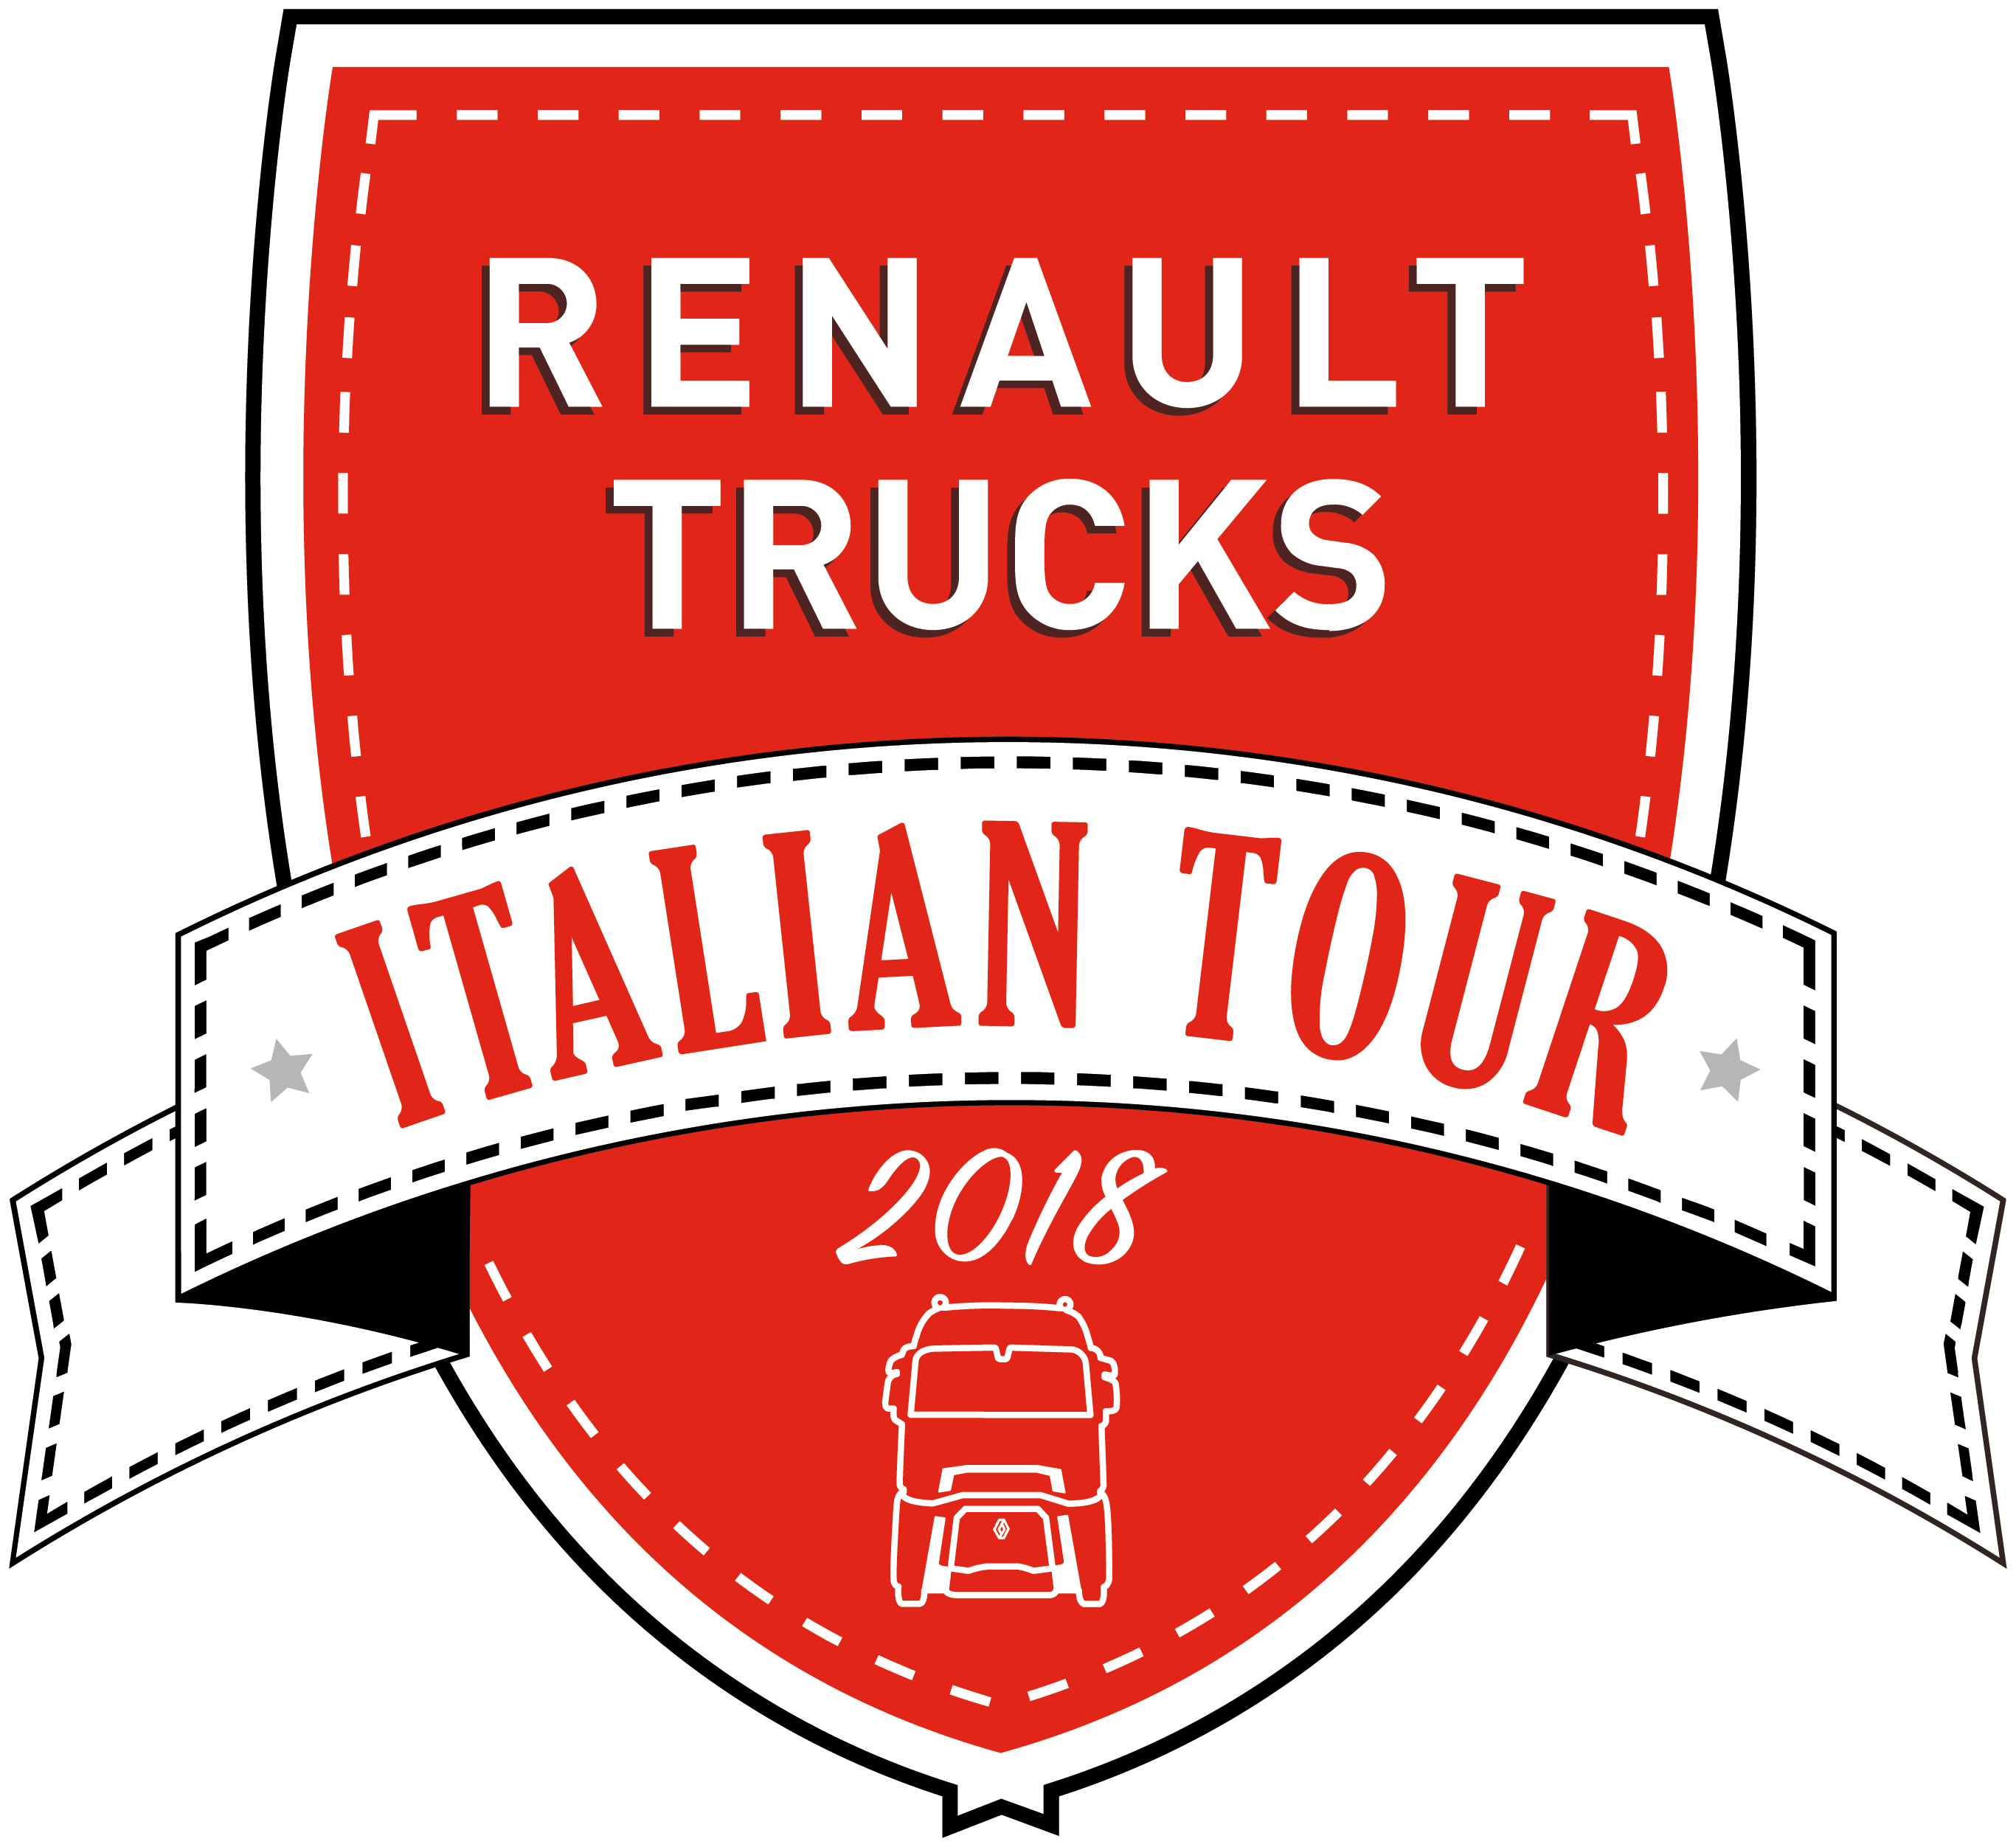 Renault Trucks Italian Tour 2018